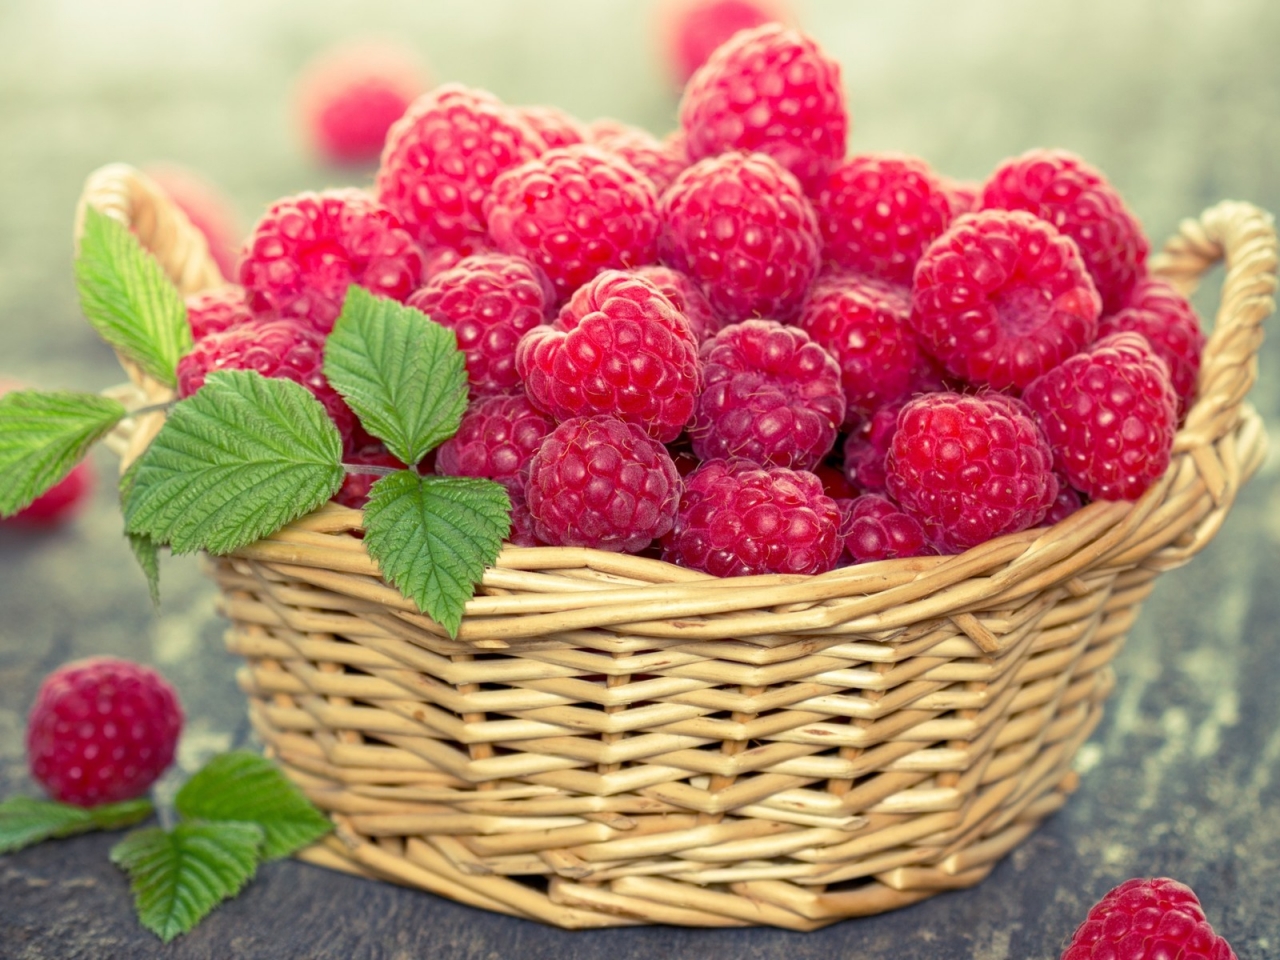 Basket of Raspberries for 1280 x 960 resolution